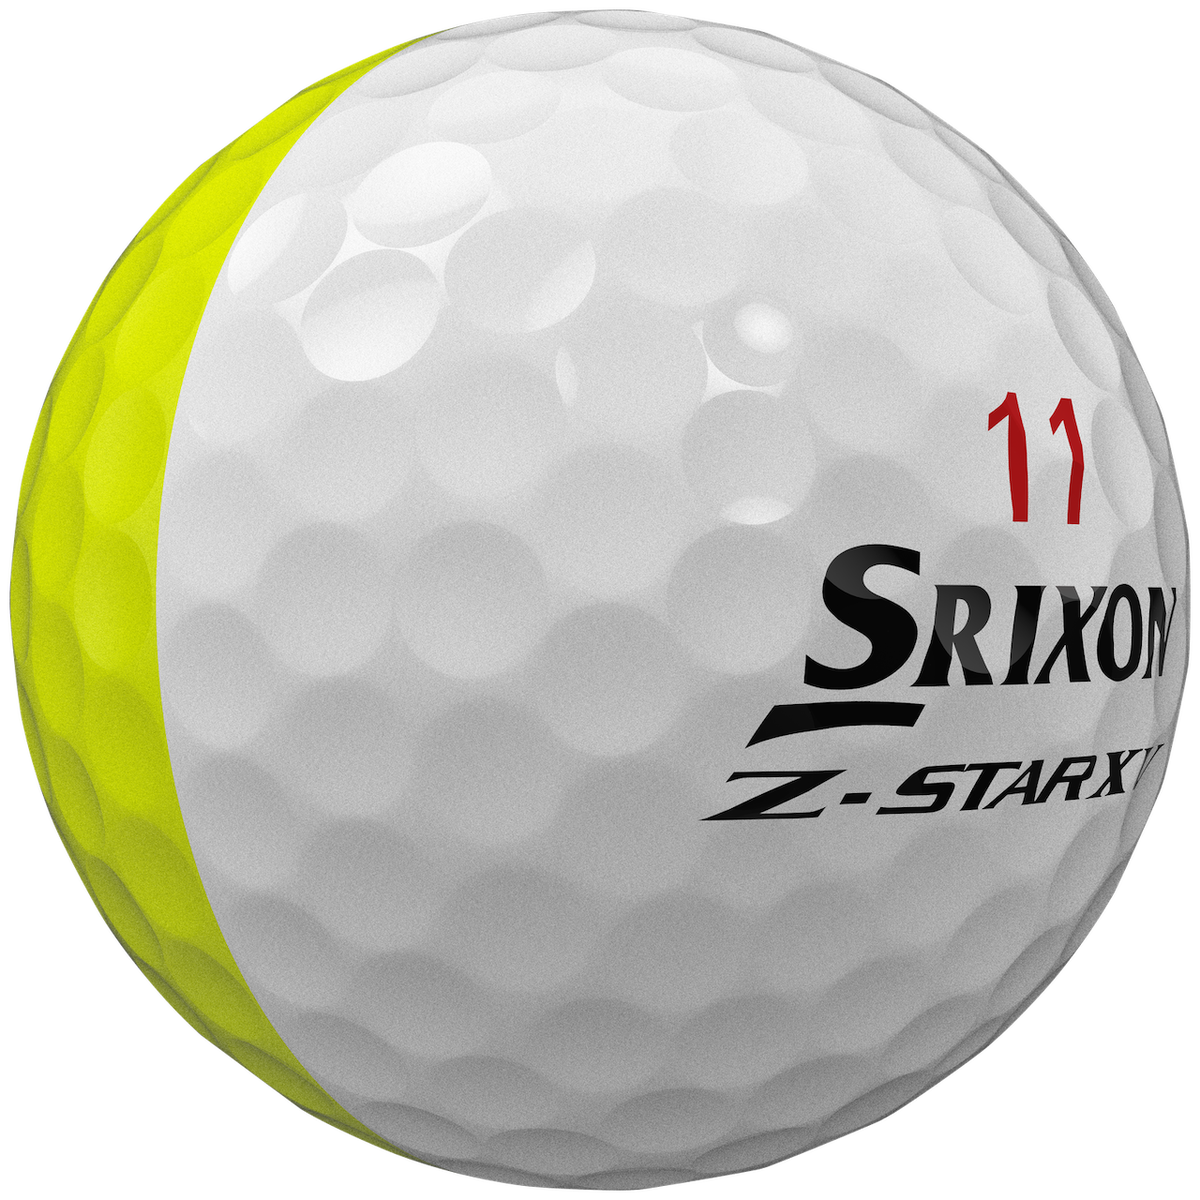 Srixon Z Star XV Divide golf ball